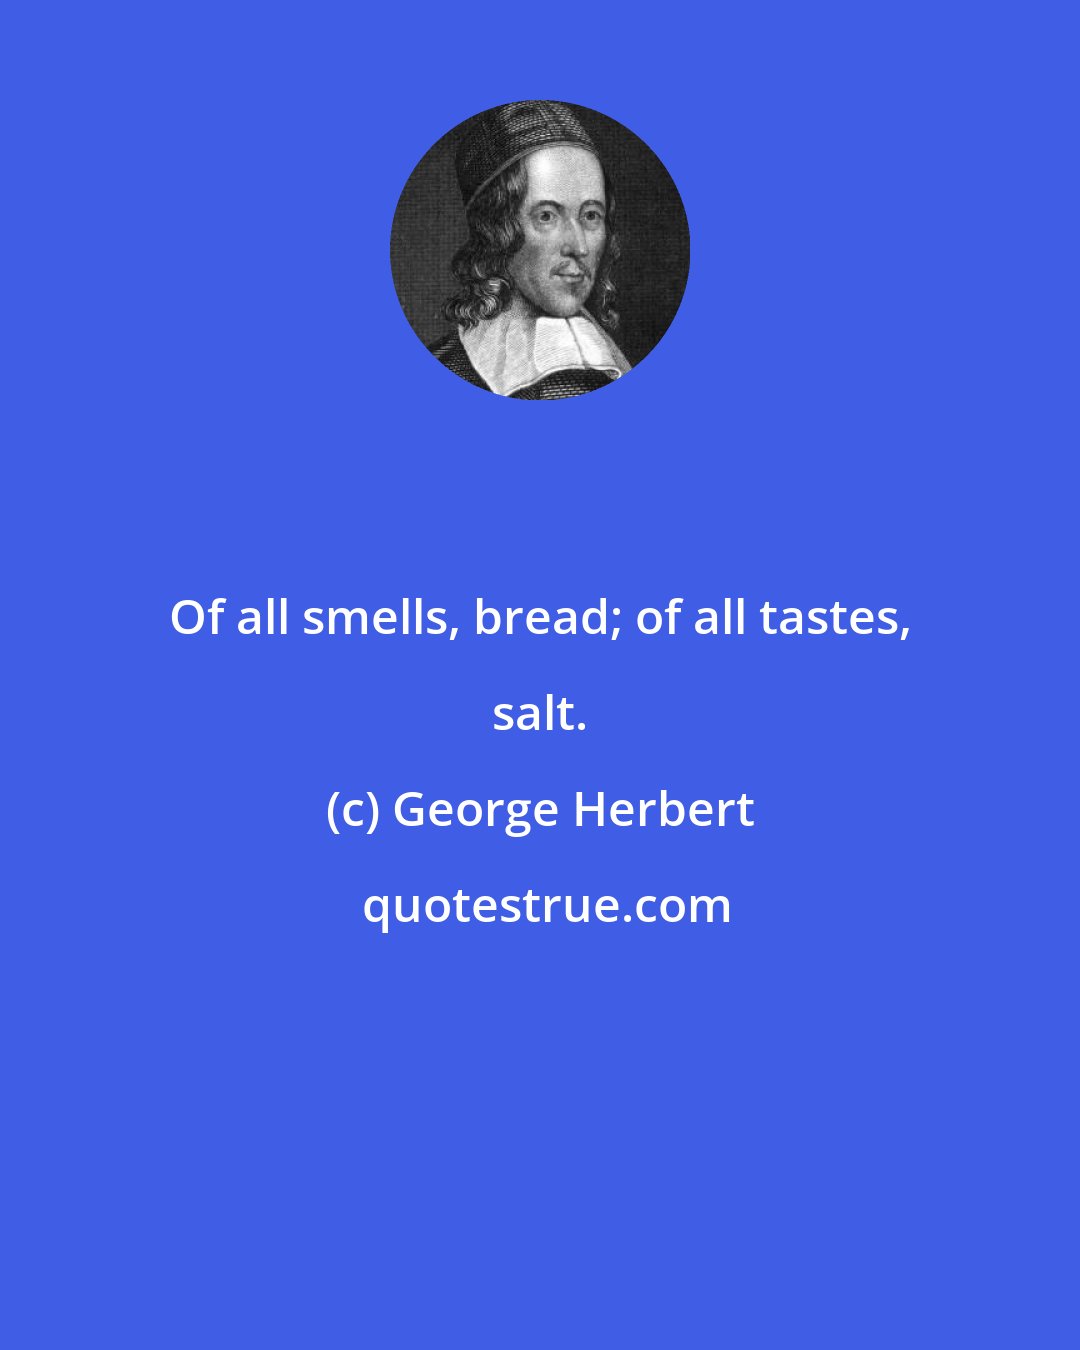 George Herbert: Of all smells, bread; of all tastes, salt.